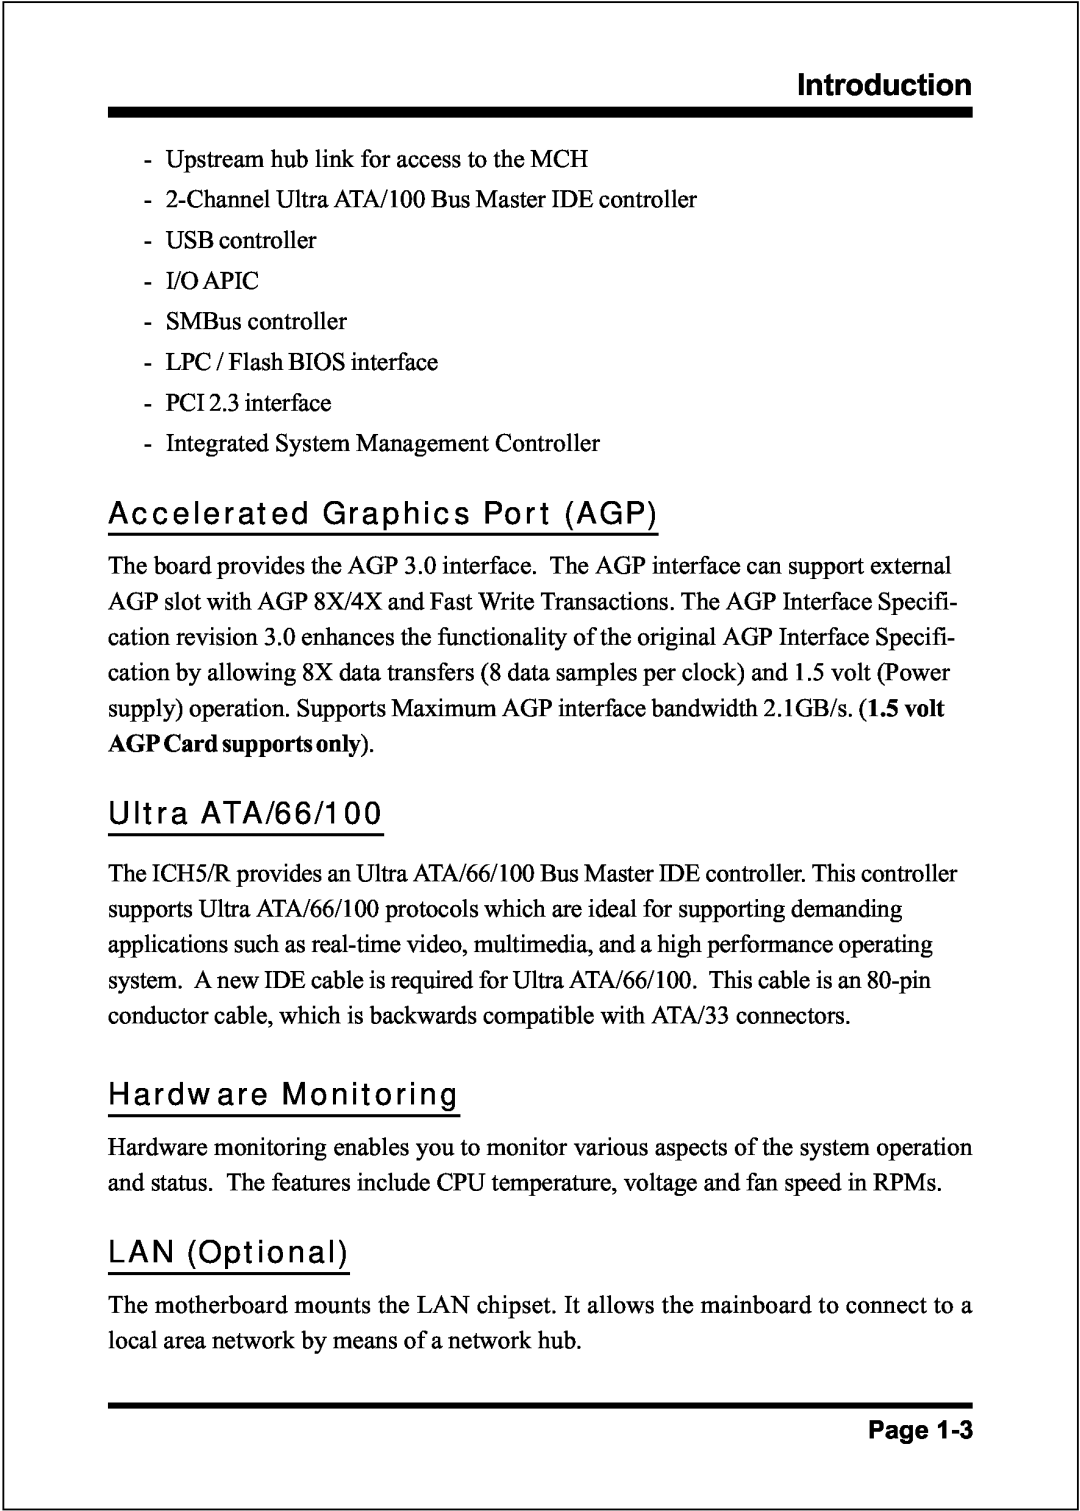 Intel DDR266 (PC2100) Accelerated Graphics Port AGP, Ultra ATA/66/100, Hardware Monitoring, LAN Optional, Introduction 